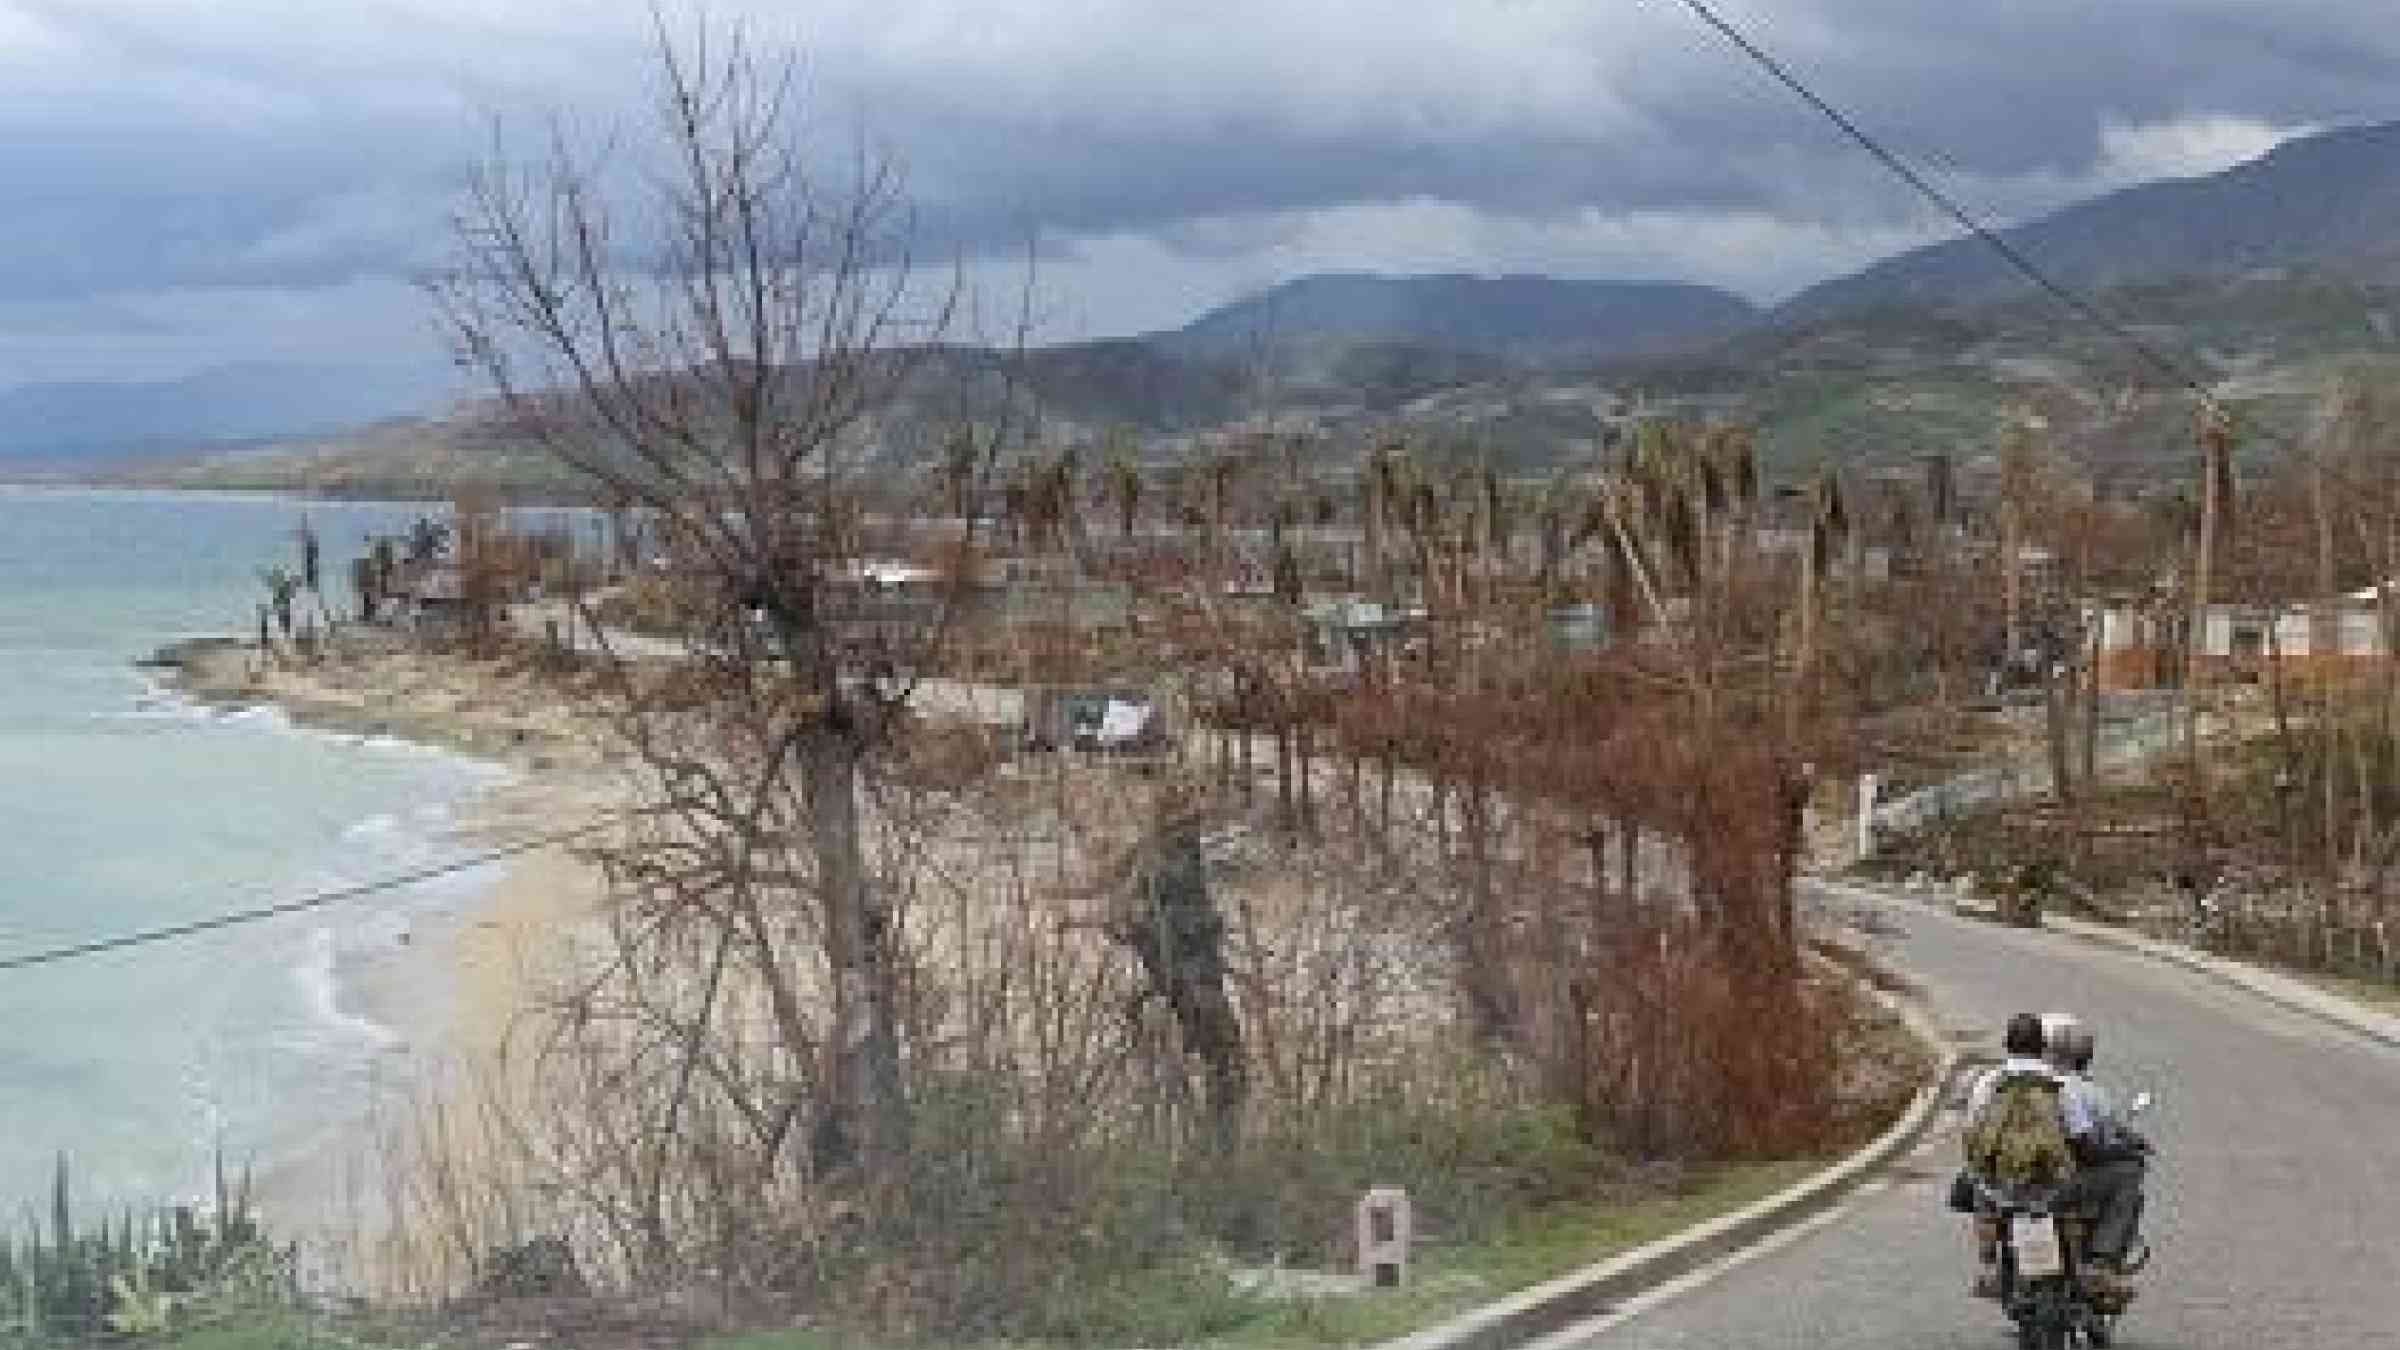 Part of the Haitian coastline in the wake of Hurricane Matthew. Photo: UNOCHA/Stefania Trassari